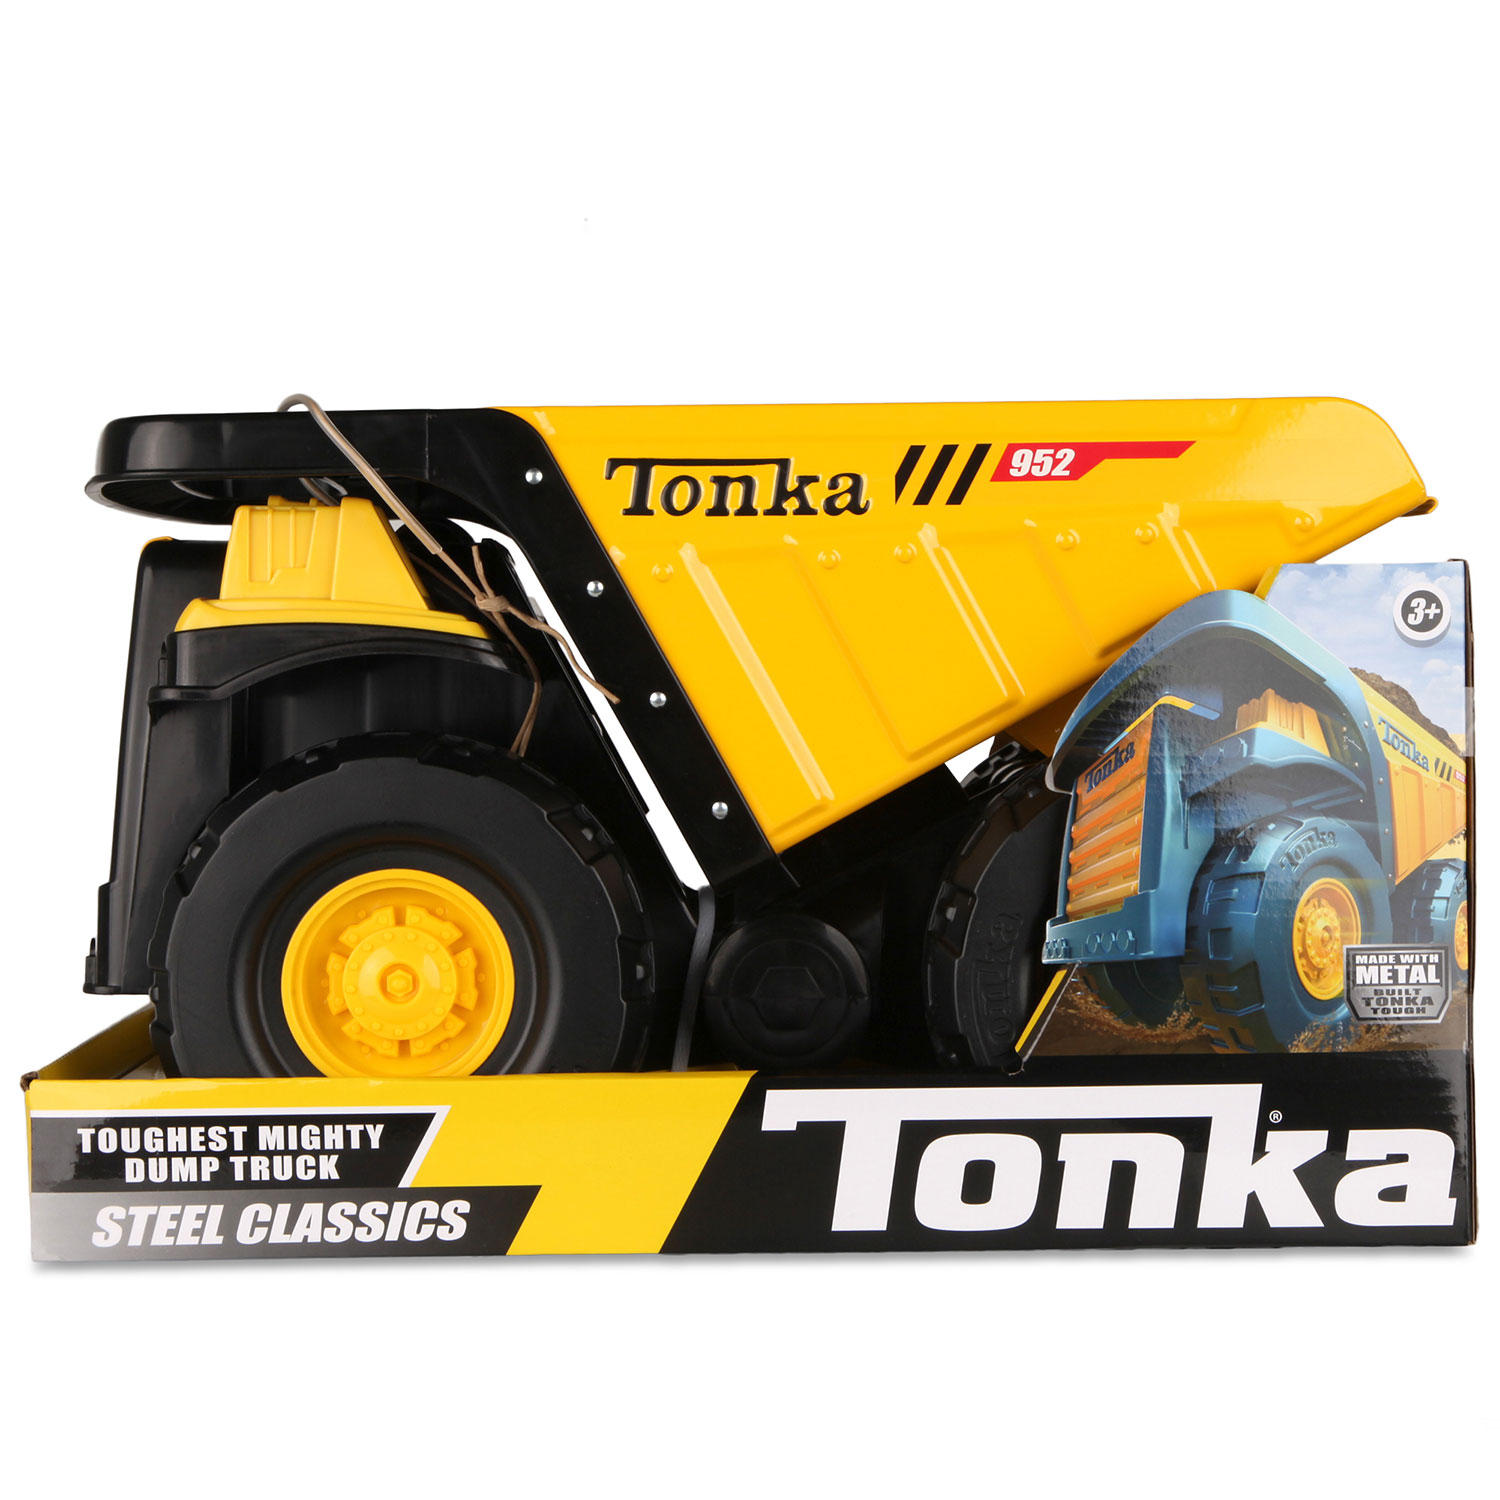 Basic Fun 06028 Tonka Steel Classics Toughest Mighty Dump Truck, Yellow - image 1 of 4